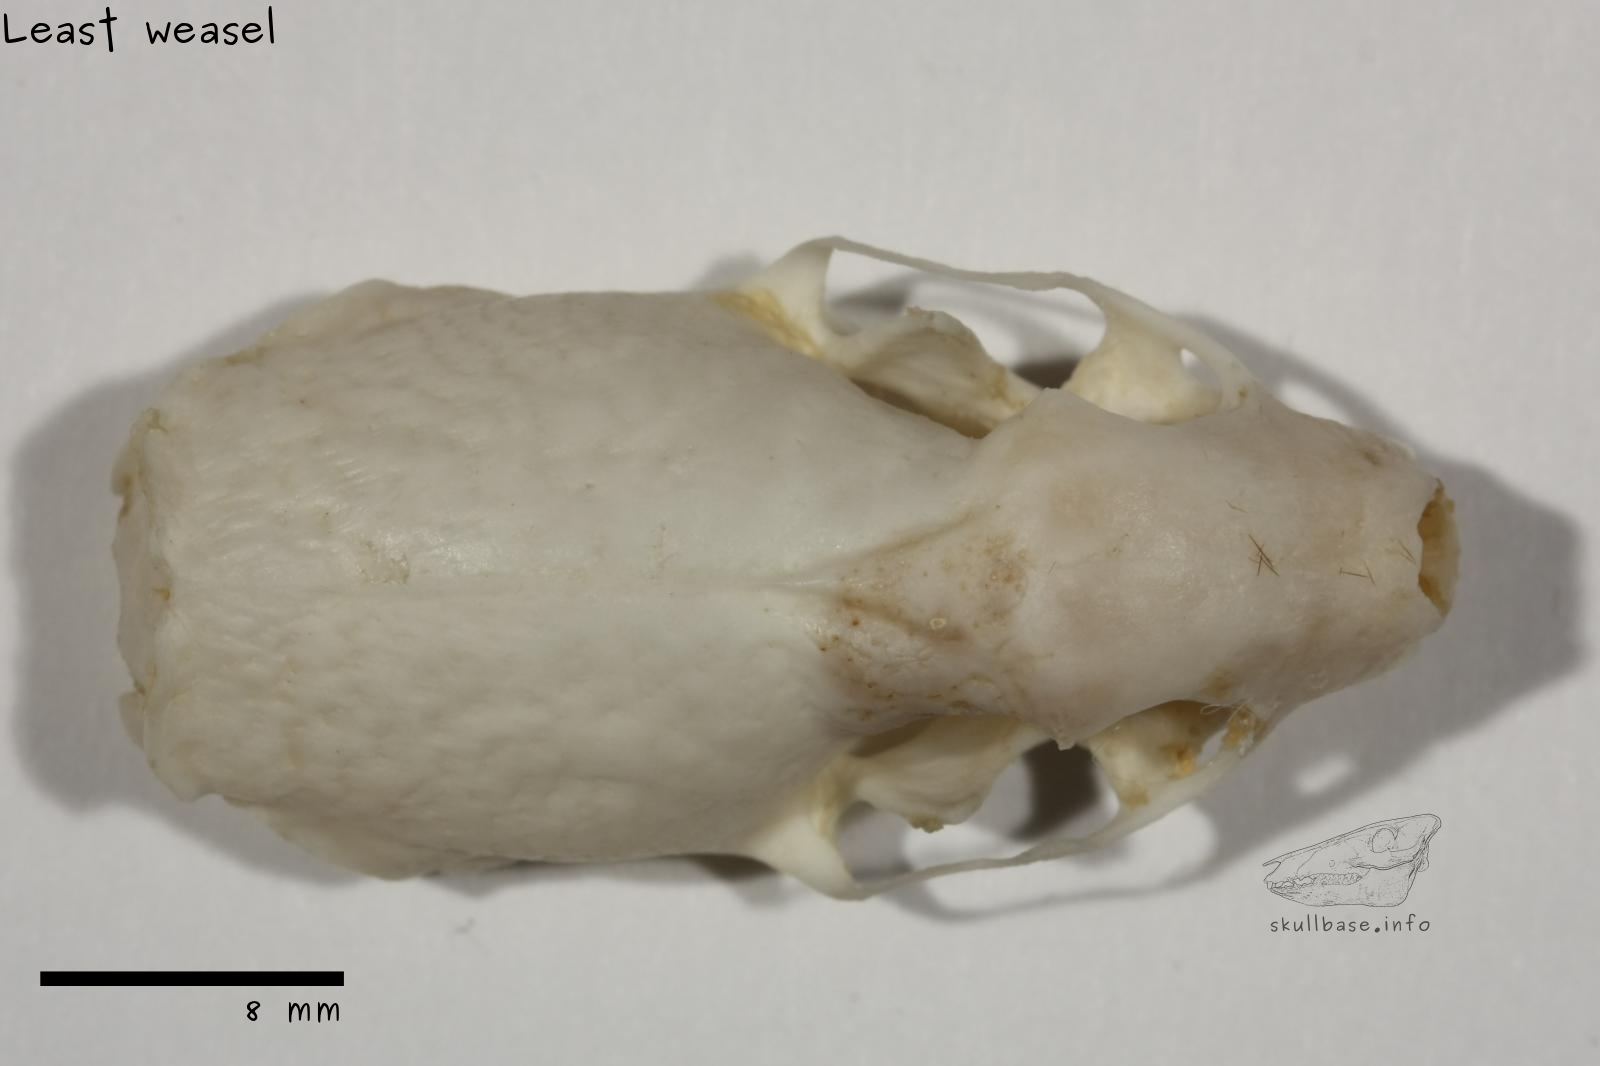 Least weasel (Mustela nivalis) skull dorsal view